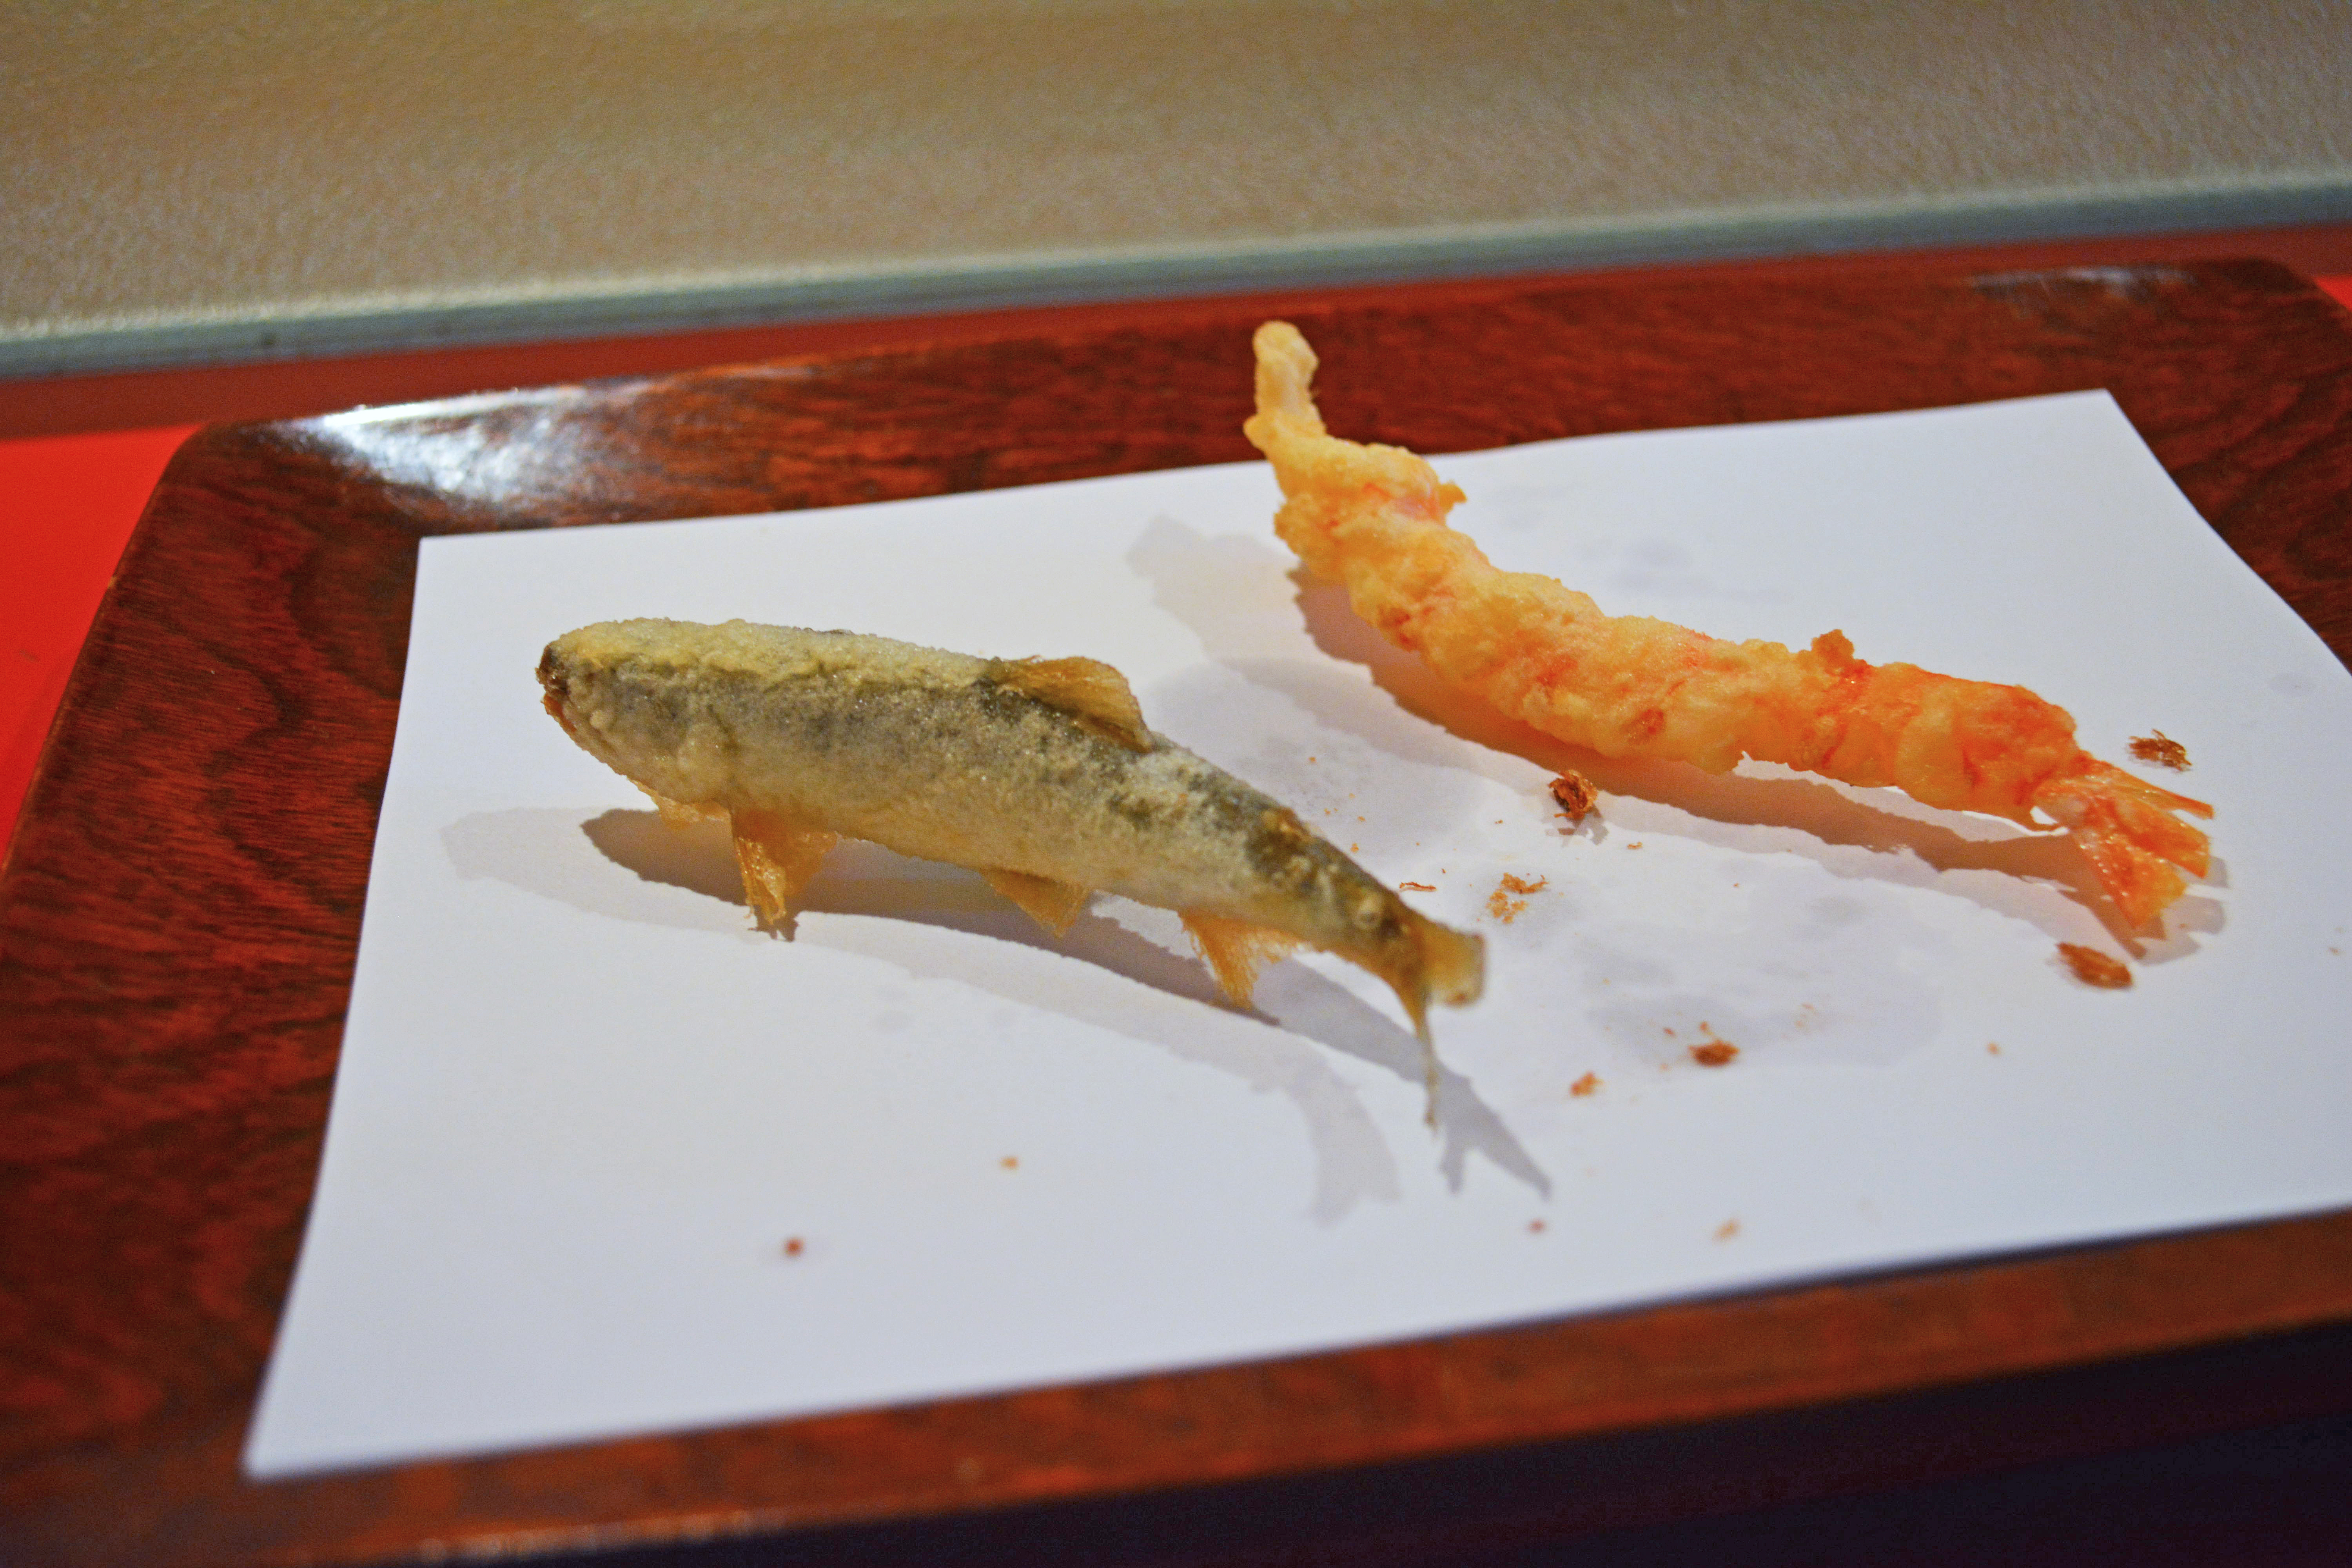 Embalming tiger shrimp in tempura at Shintaro | The Japan Times